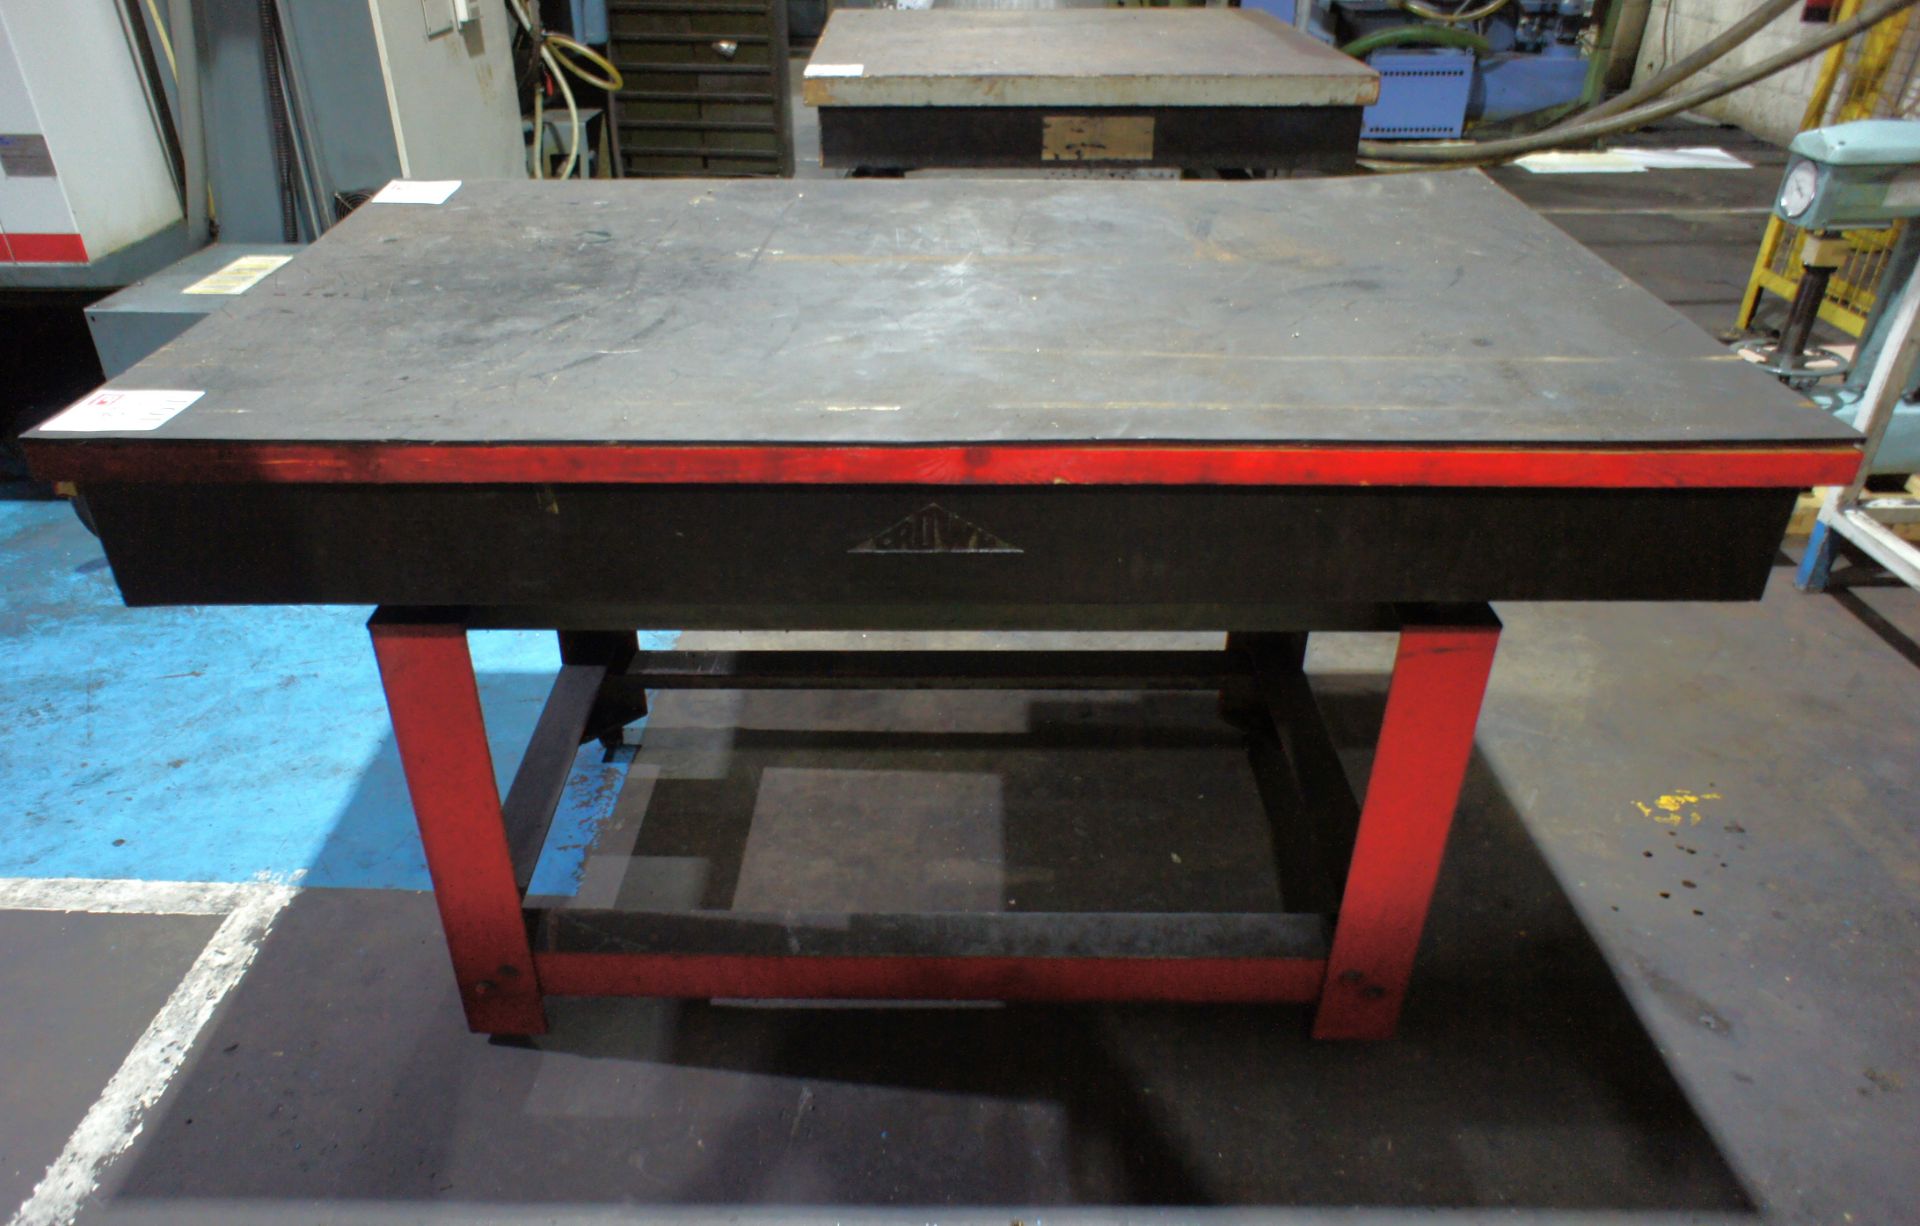 Granite inspection table